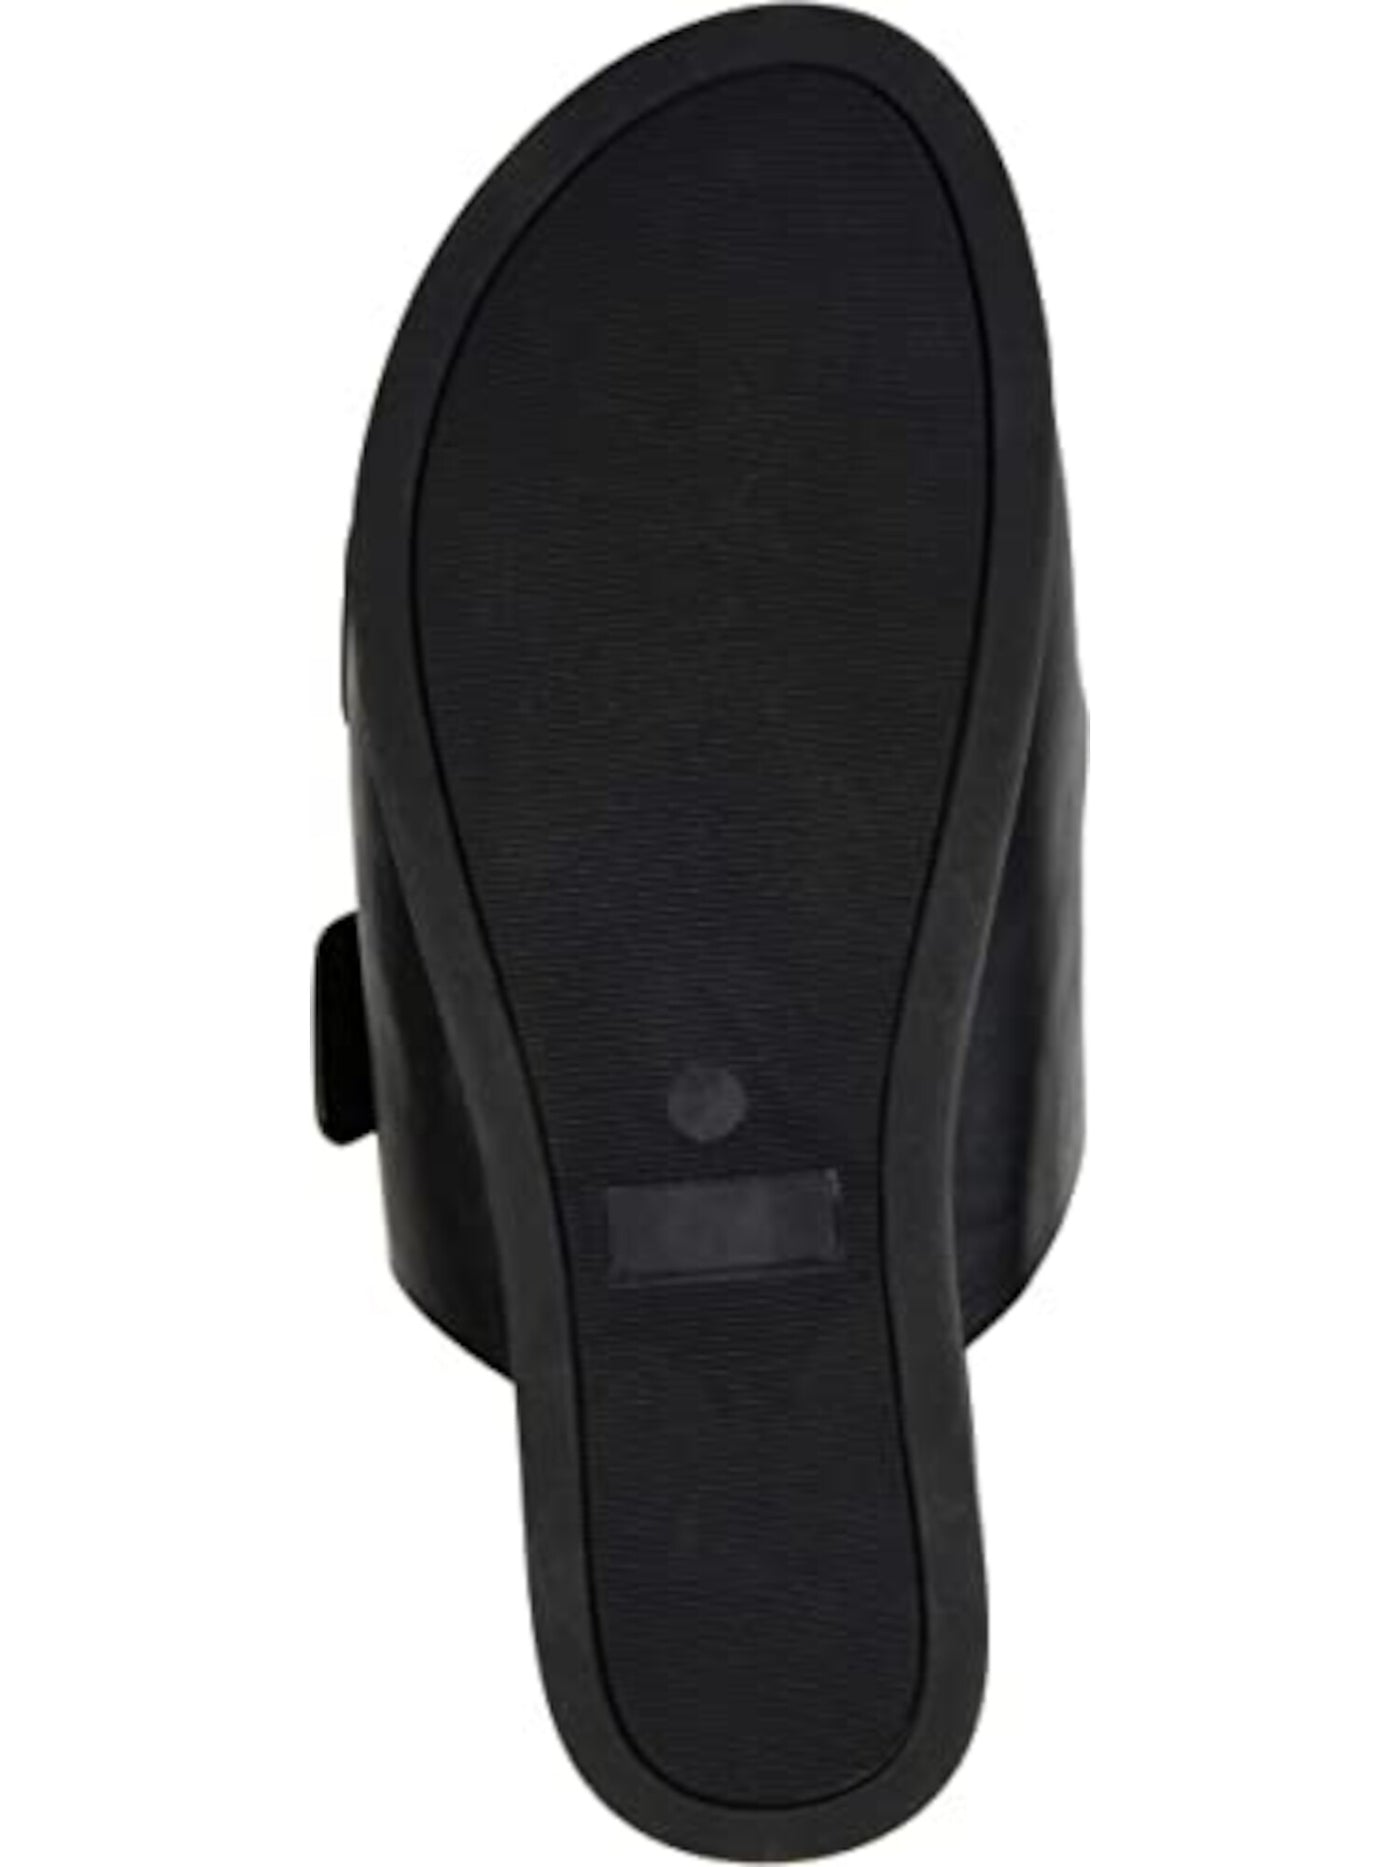 JOURNEE COLLECTION Womens Black 0.5" Platform Comfort Whitley Round Toe Platform Buckle Slide Sandals Shoes M